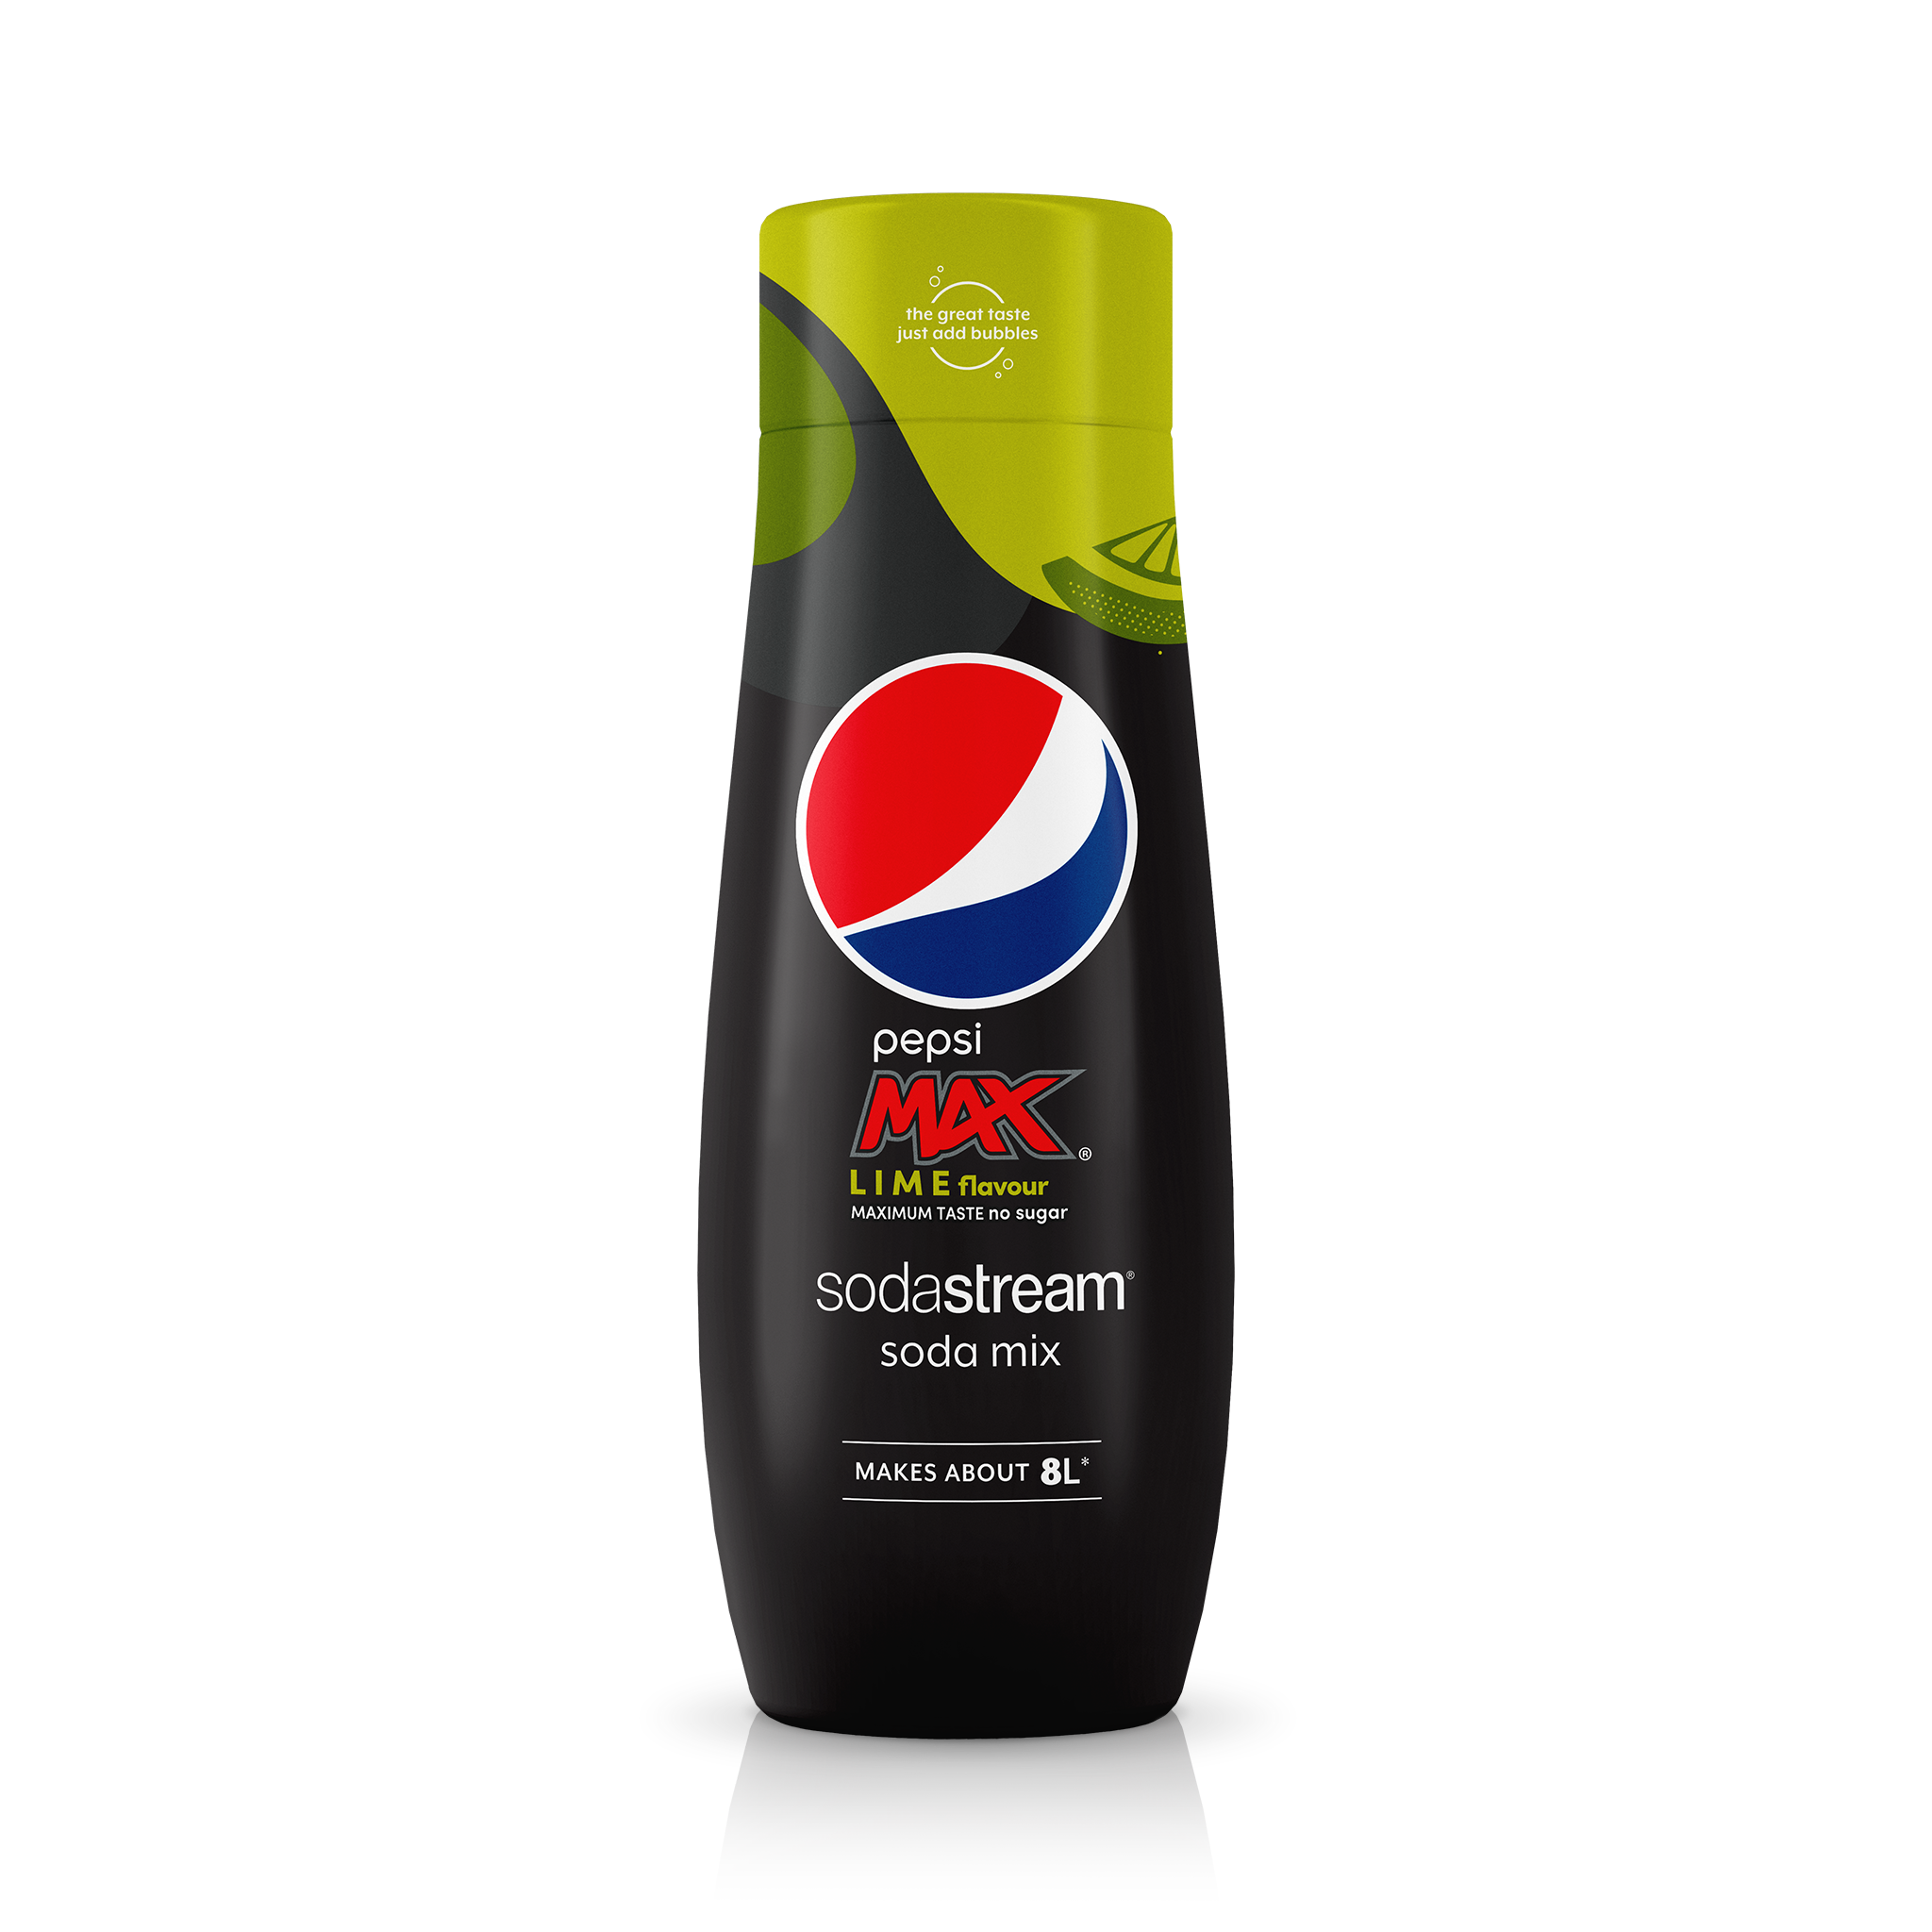 sodastream Pepsi Max Lime